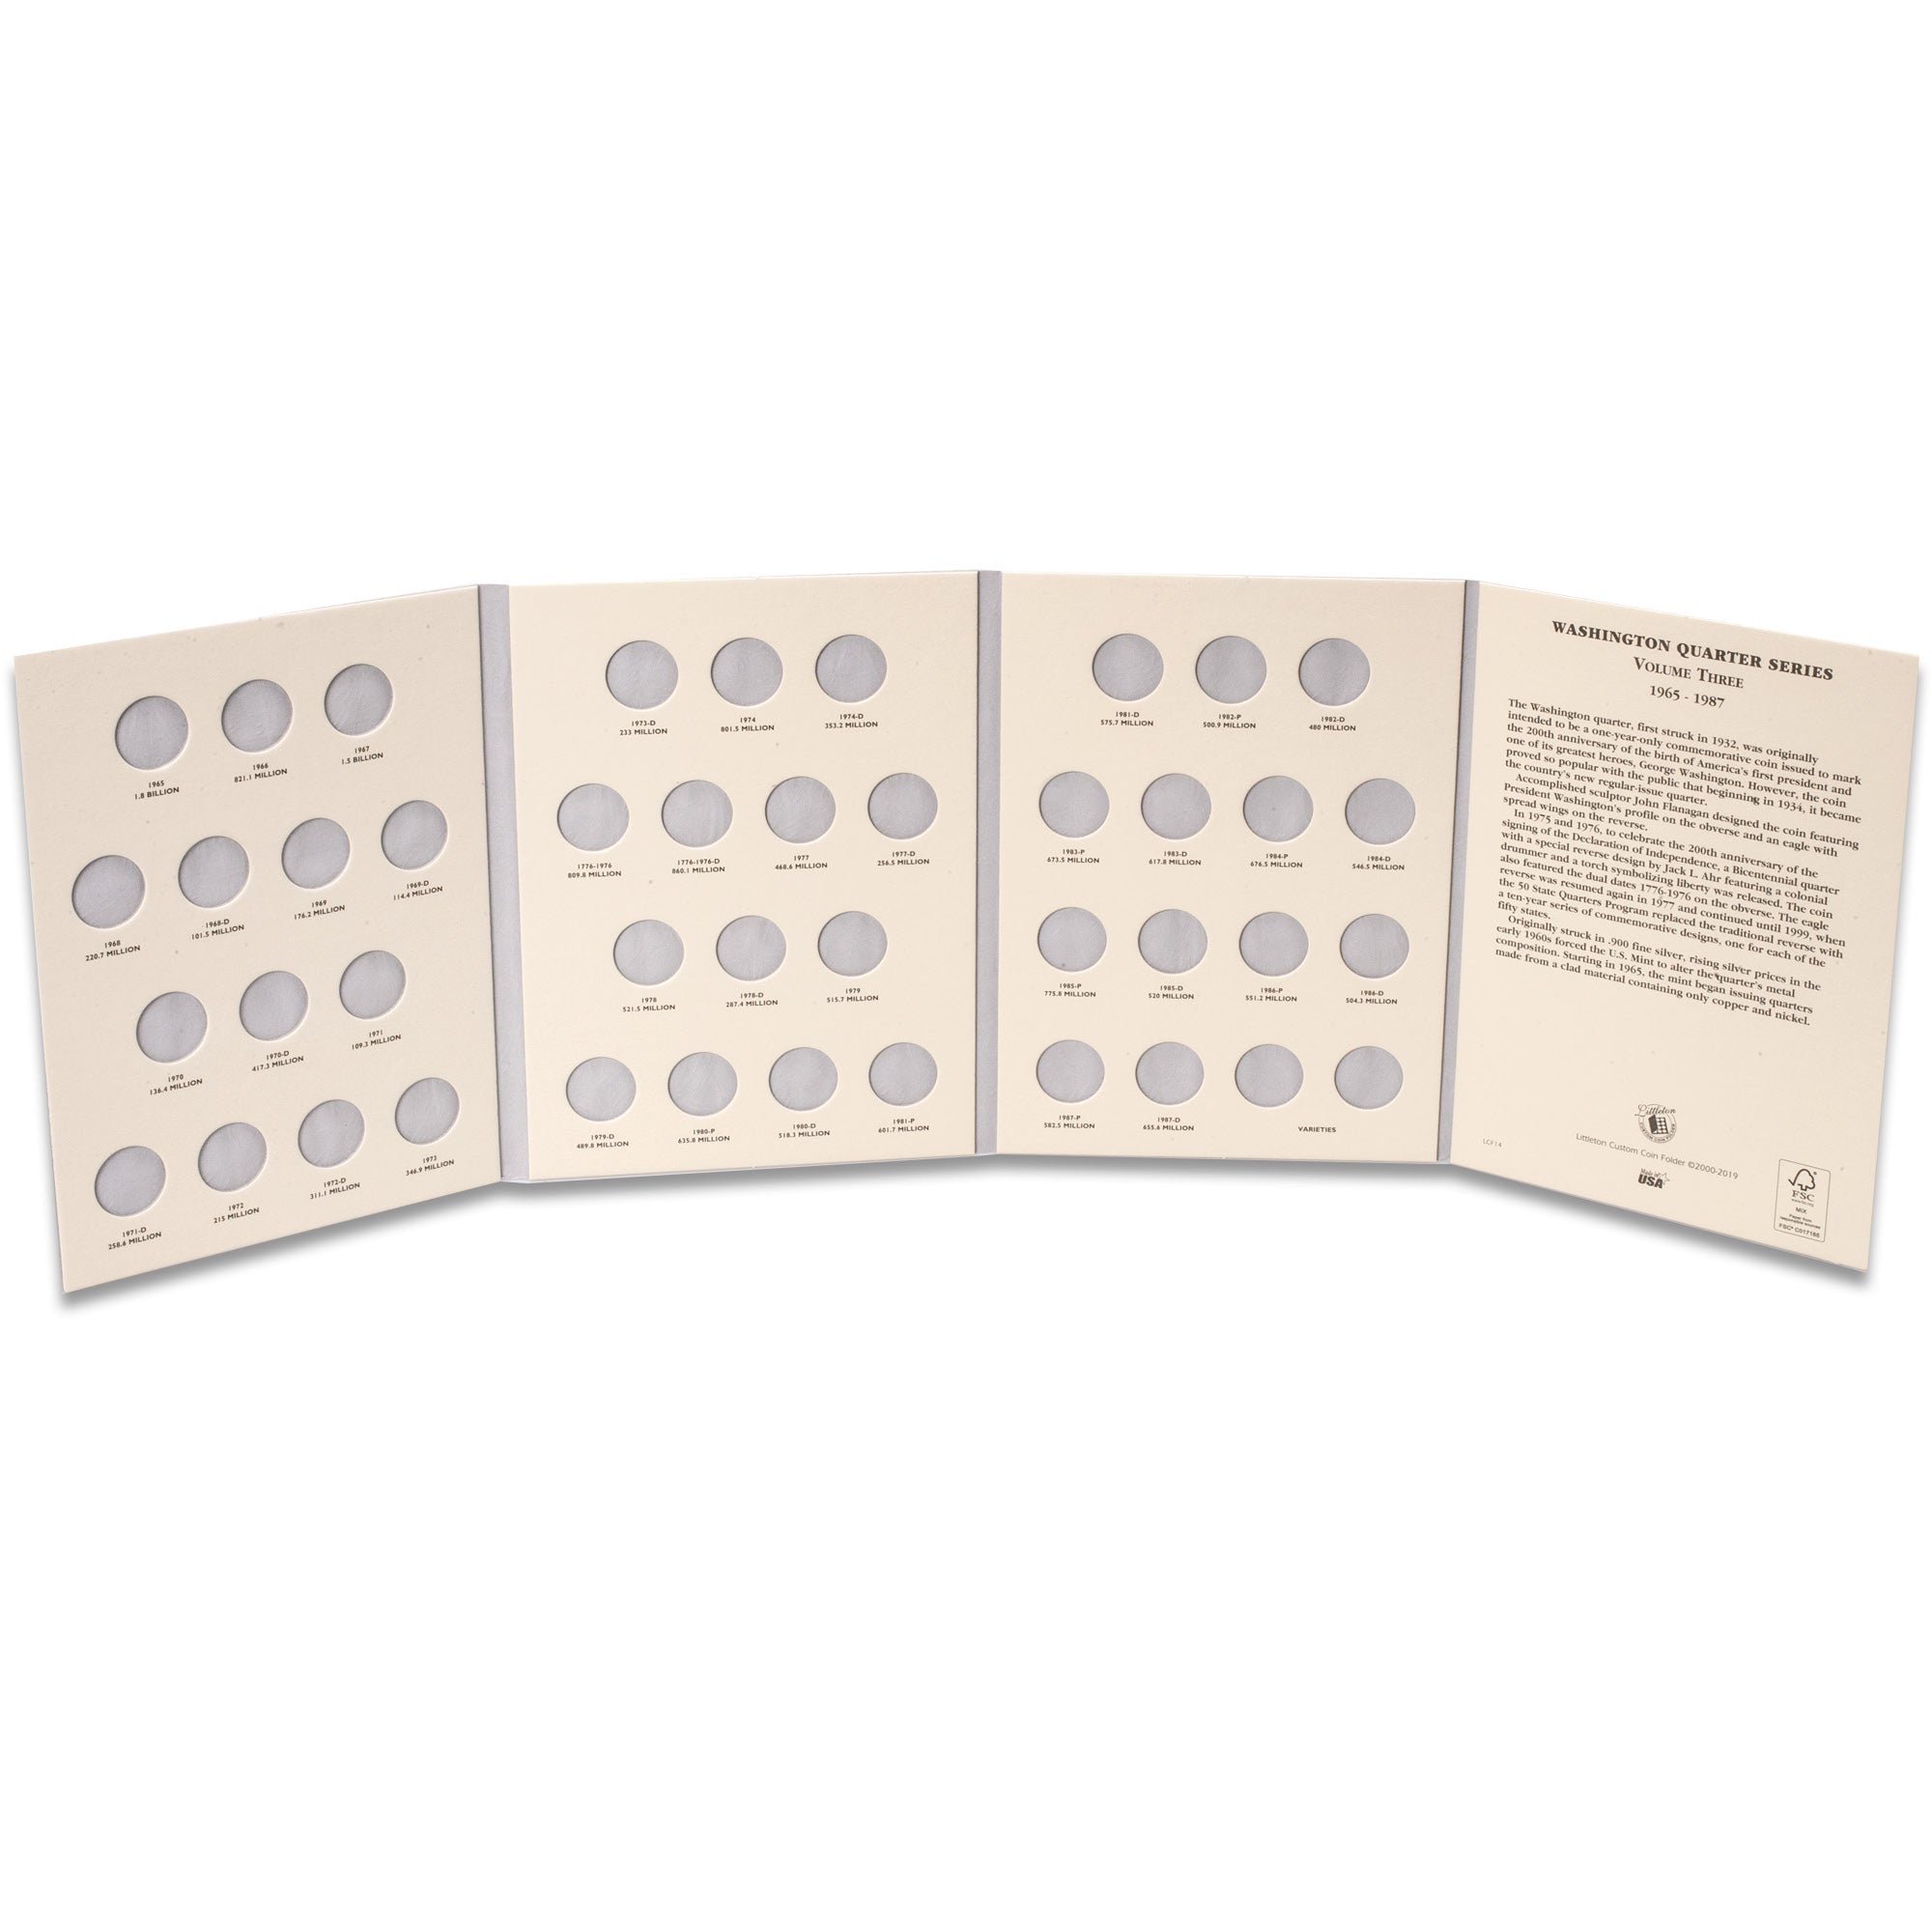 1965-1987 Washington Quarter Folder Volume 3 Littleton Coin Company